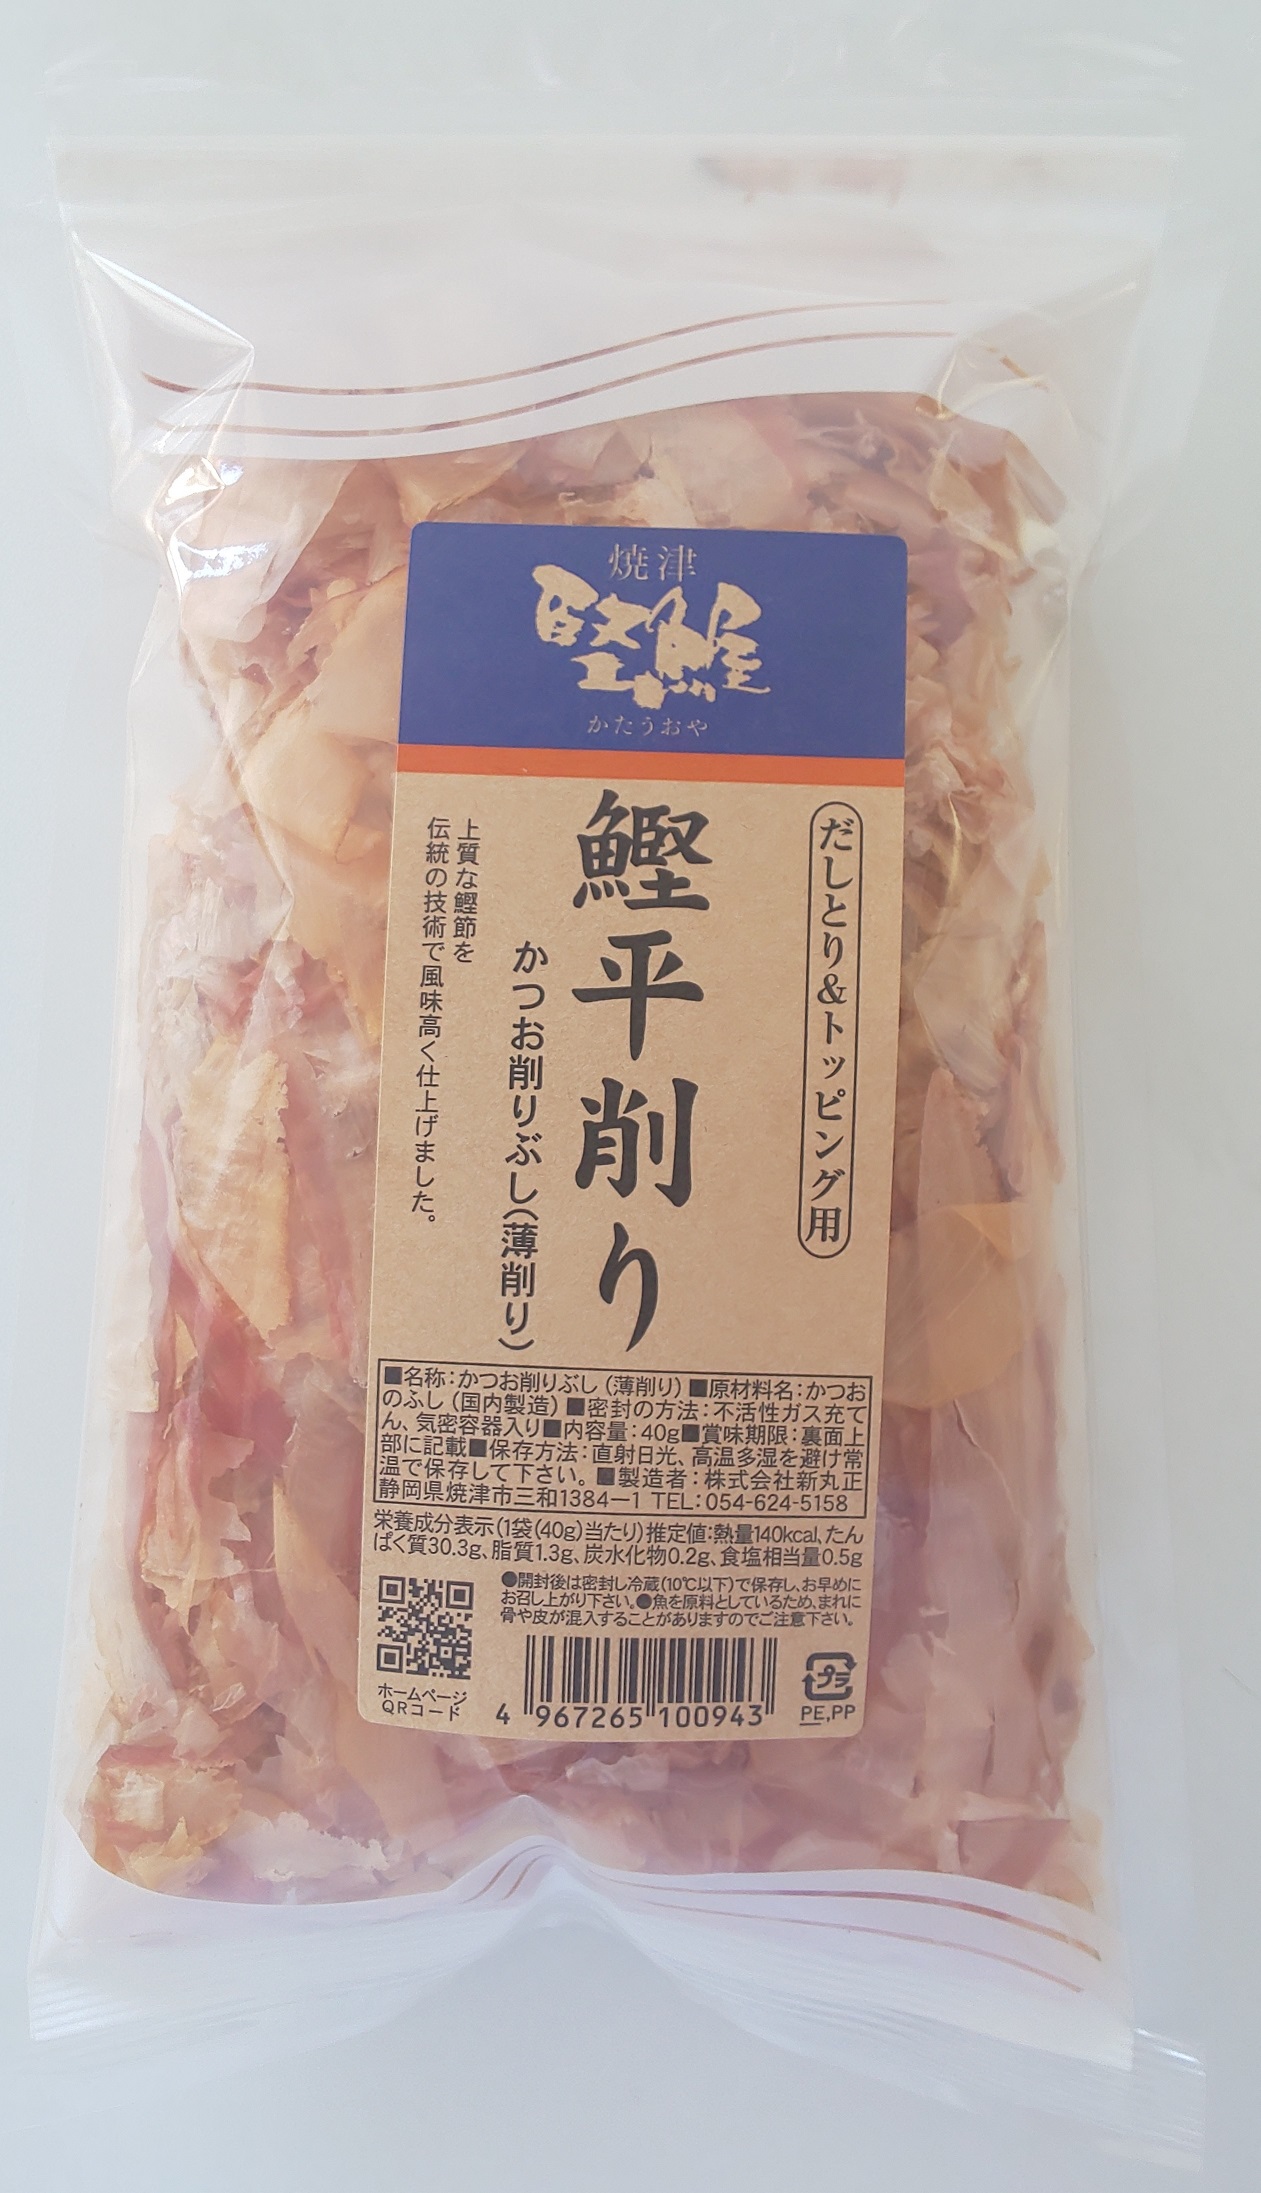 Ktsuo Hira Kezuri 40g (Dried bonito shavings)